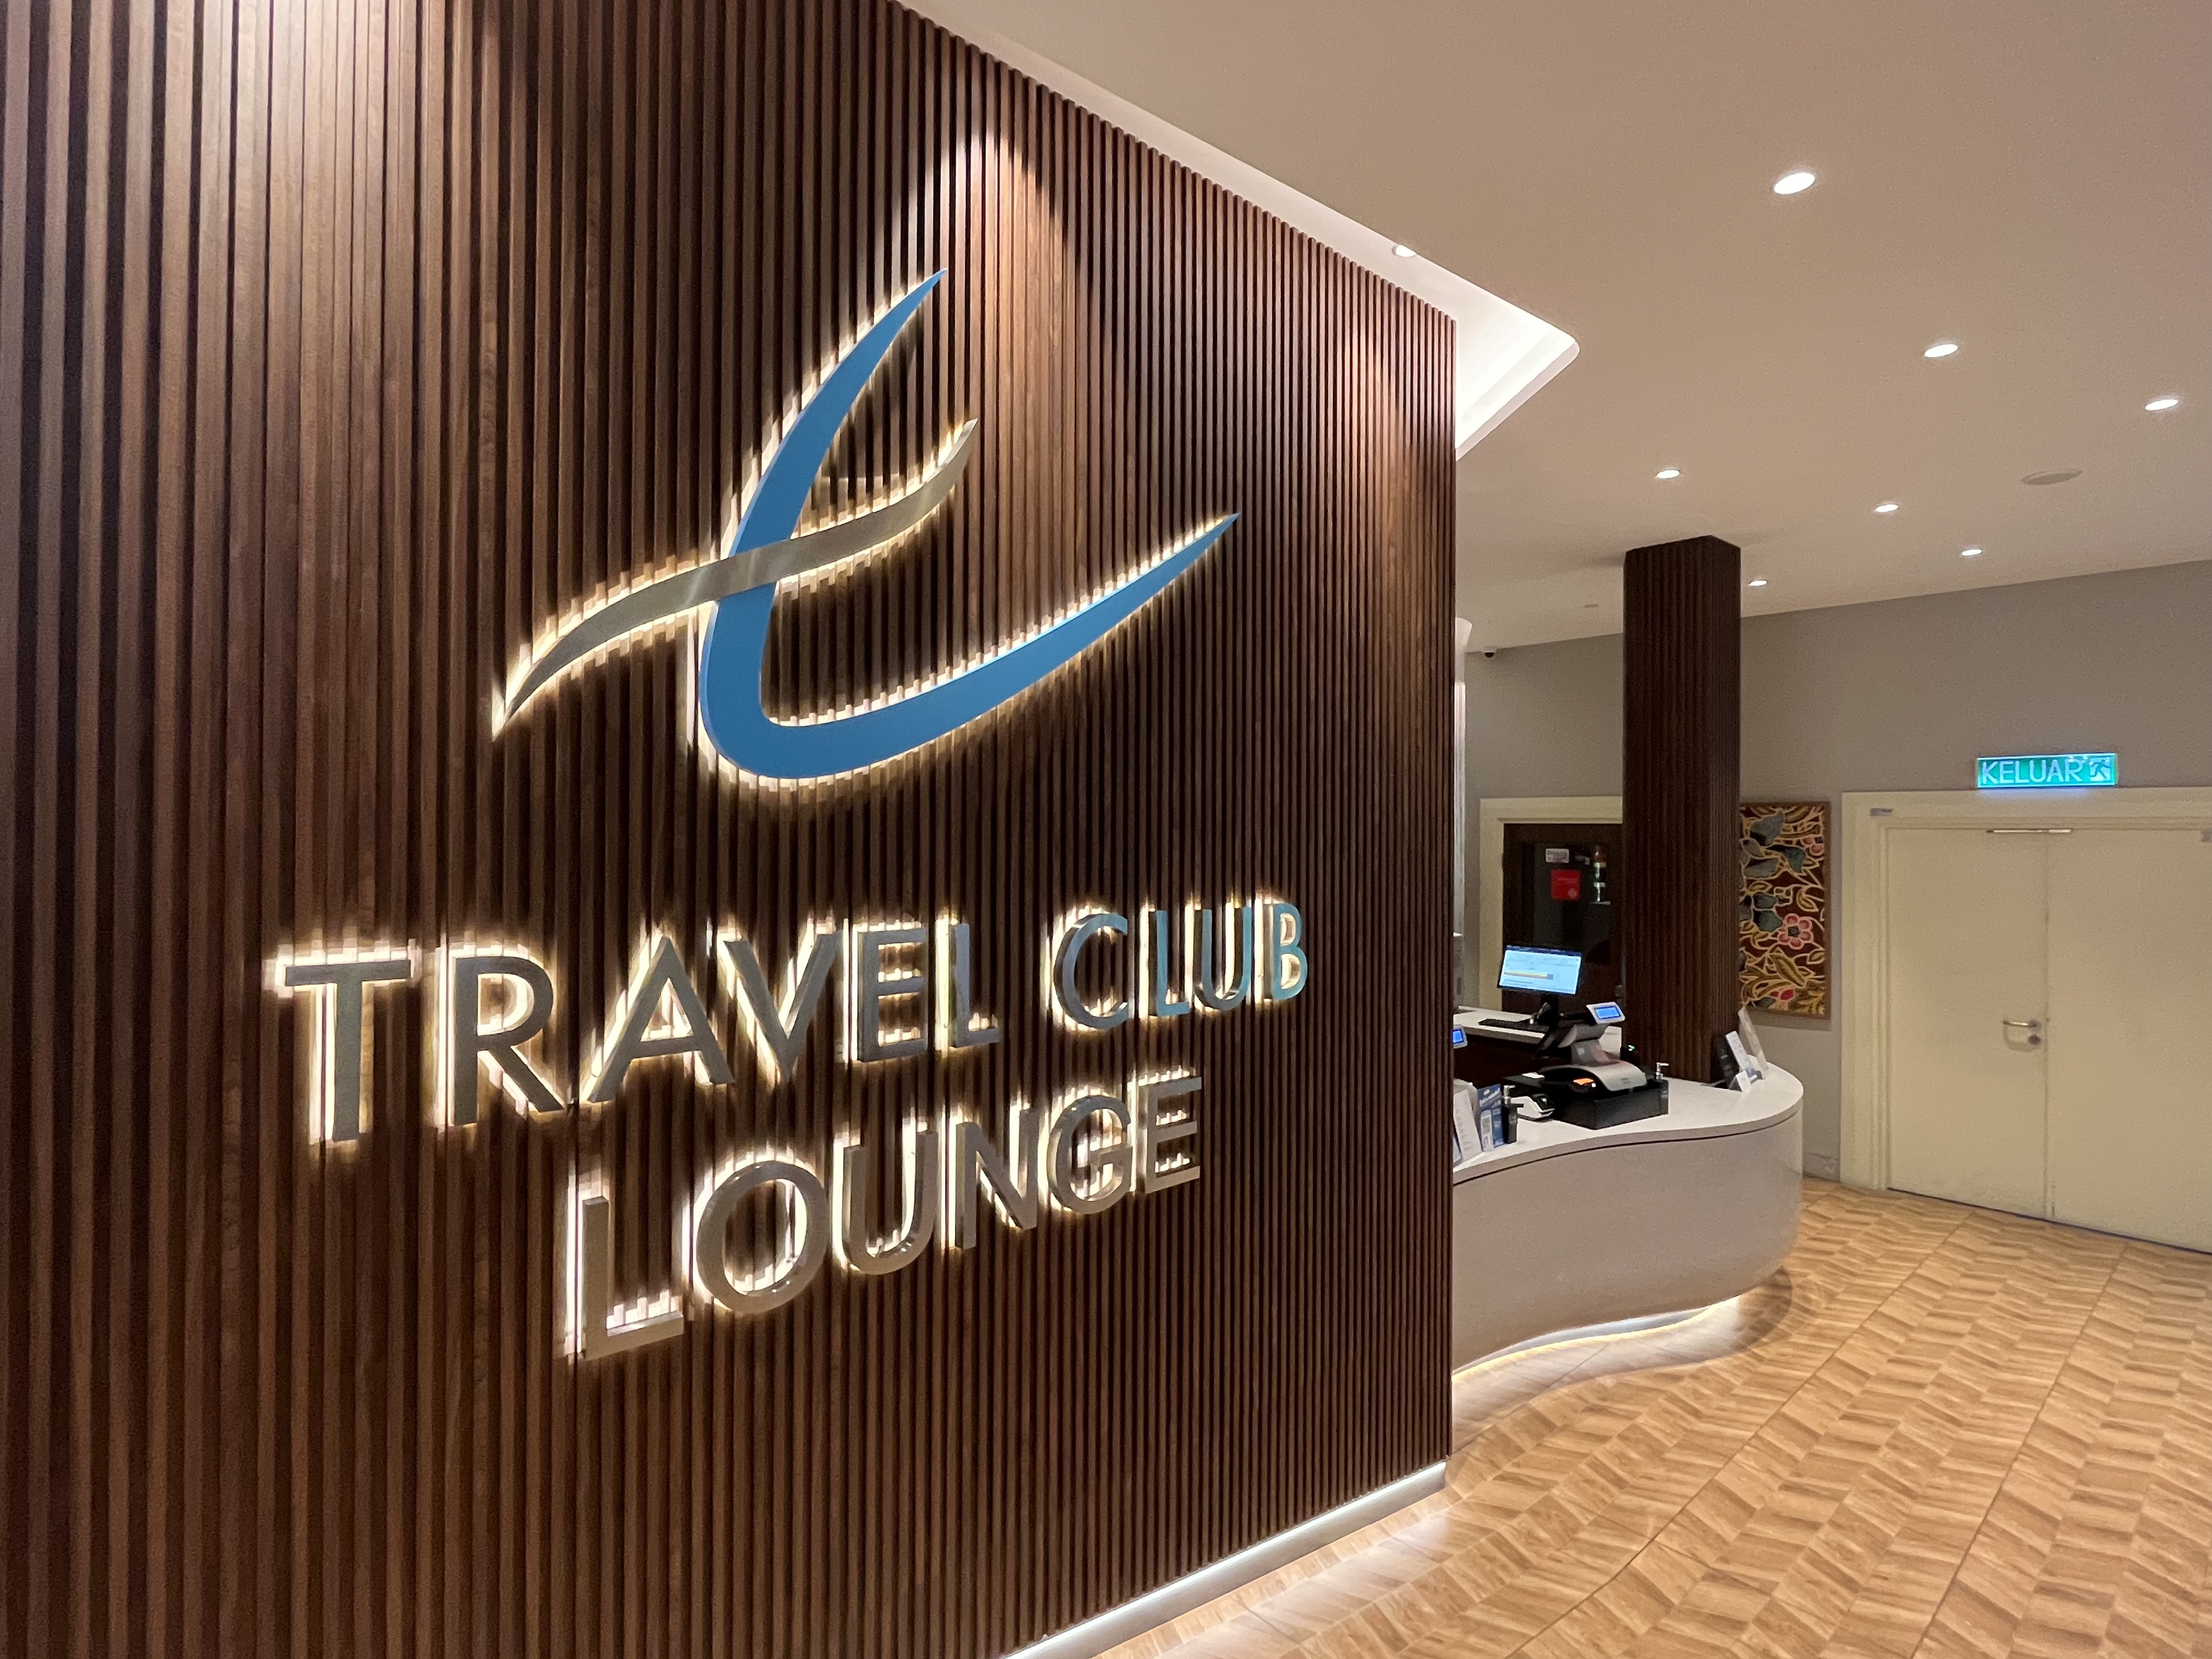 ¡travel club lounge